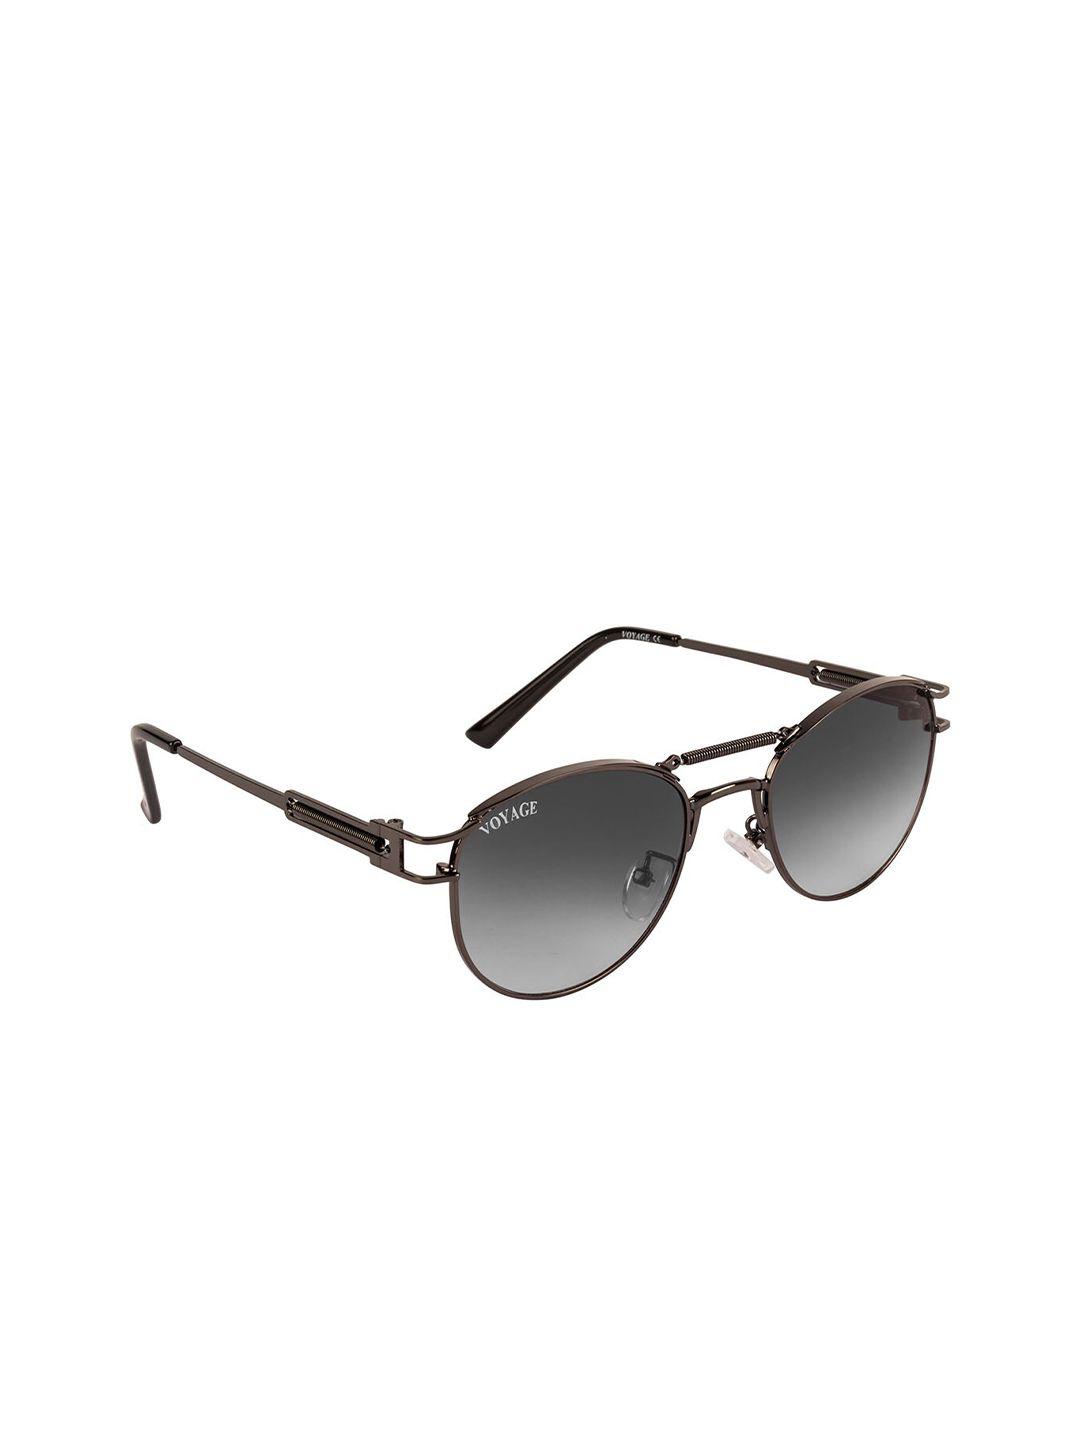 voyage unisex black lens & gunmetal-toned round sunglasses with uv protected lens